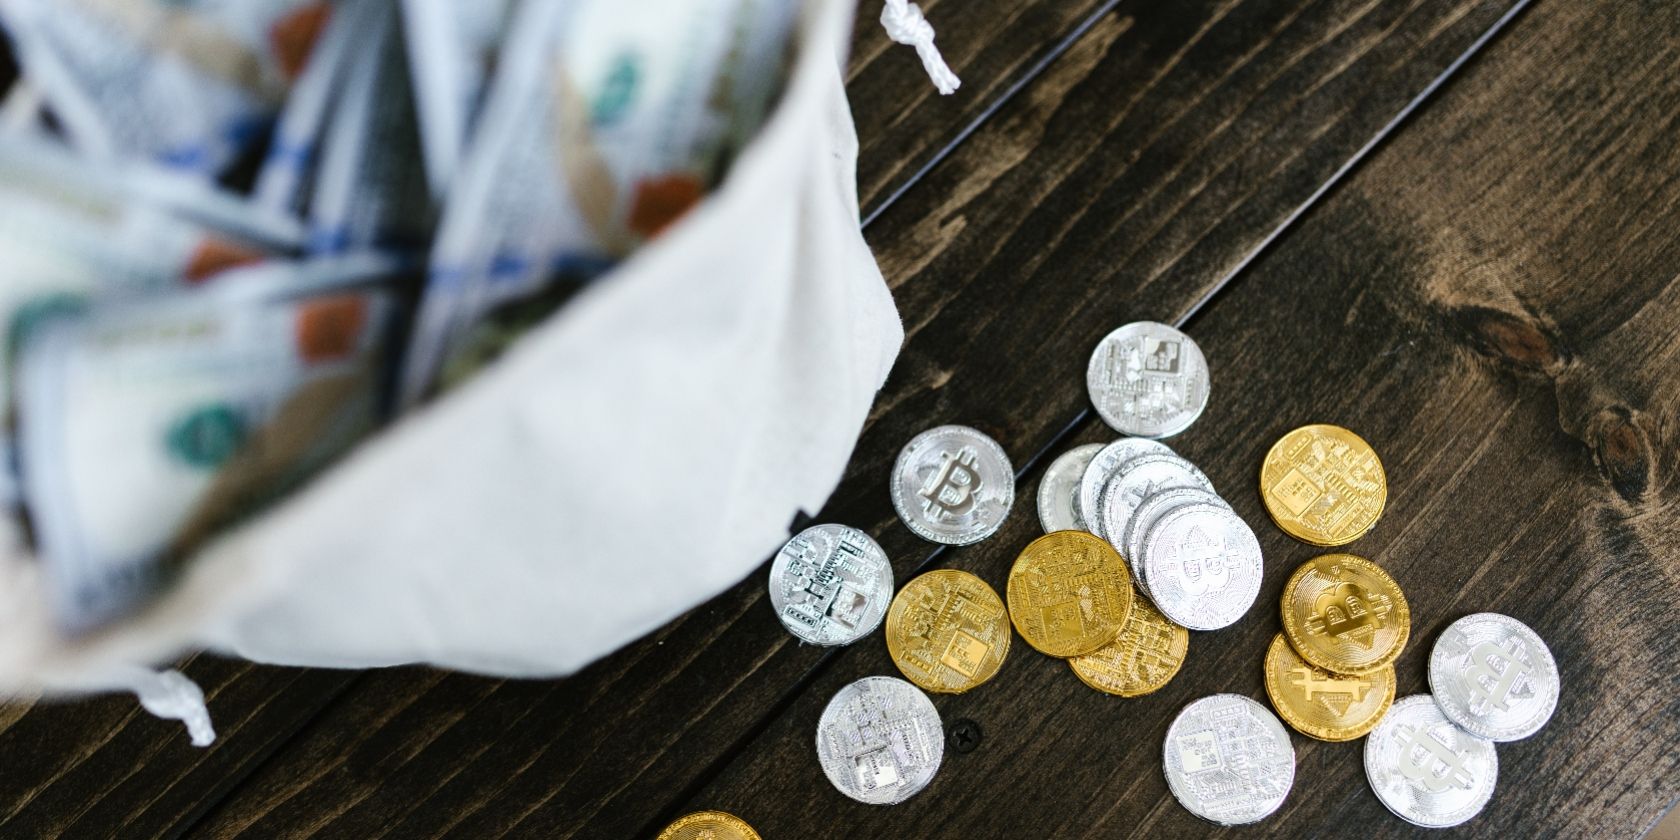 bitcoins next to bag of money